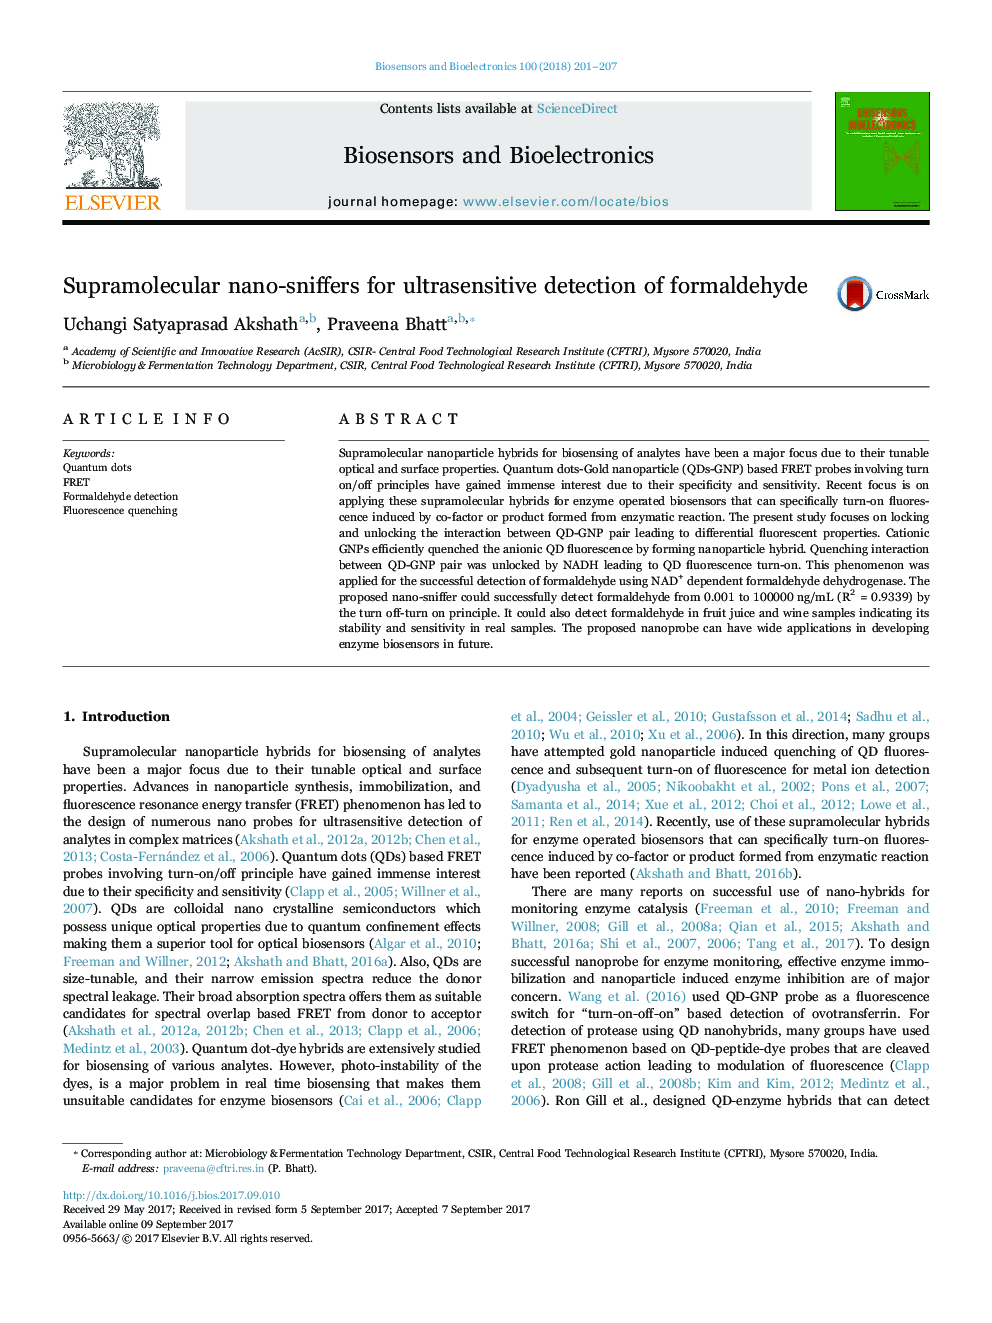 Supramolecular nano-sniffers for ultrasensitive detection of formaldehyde